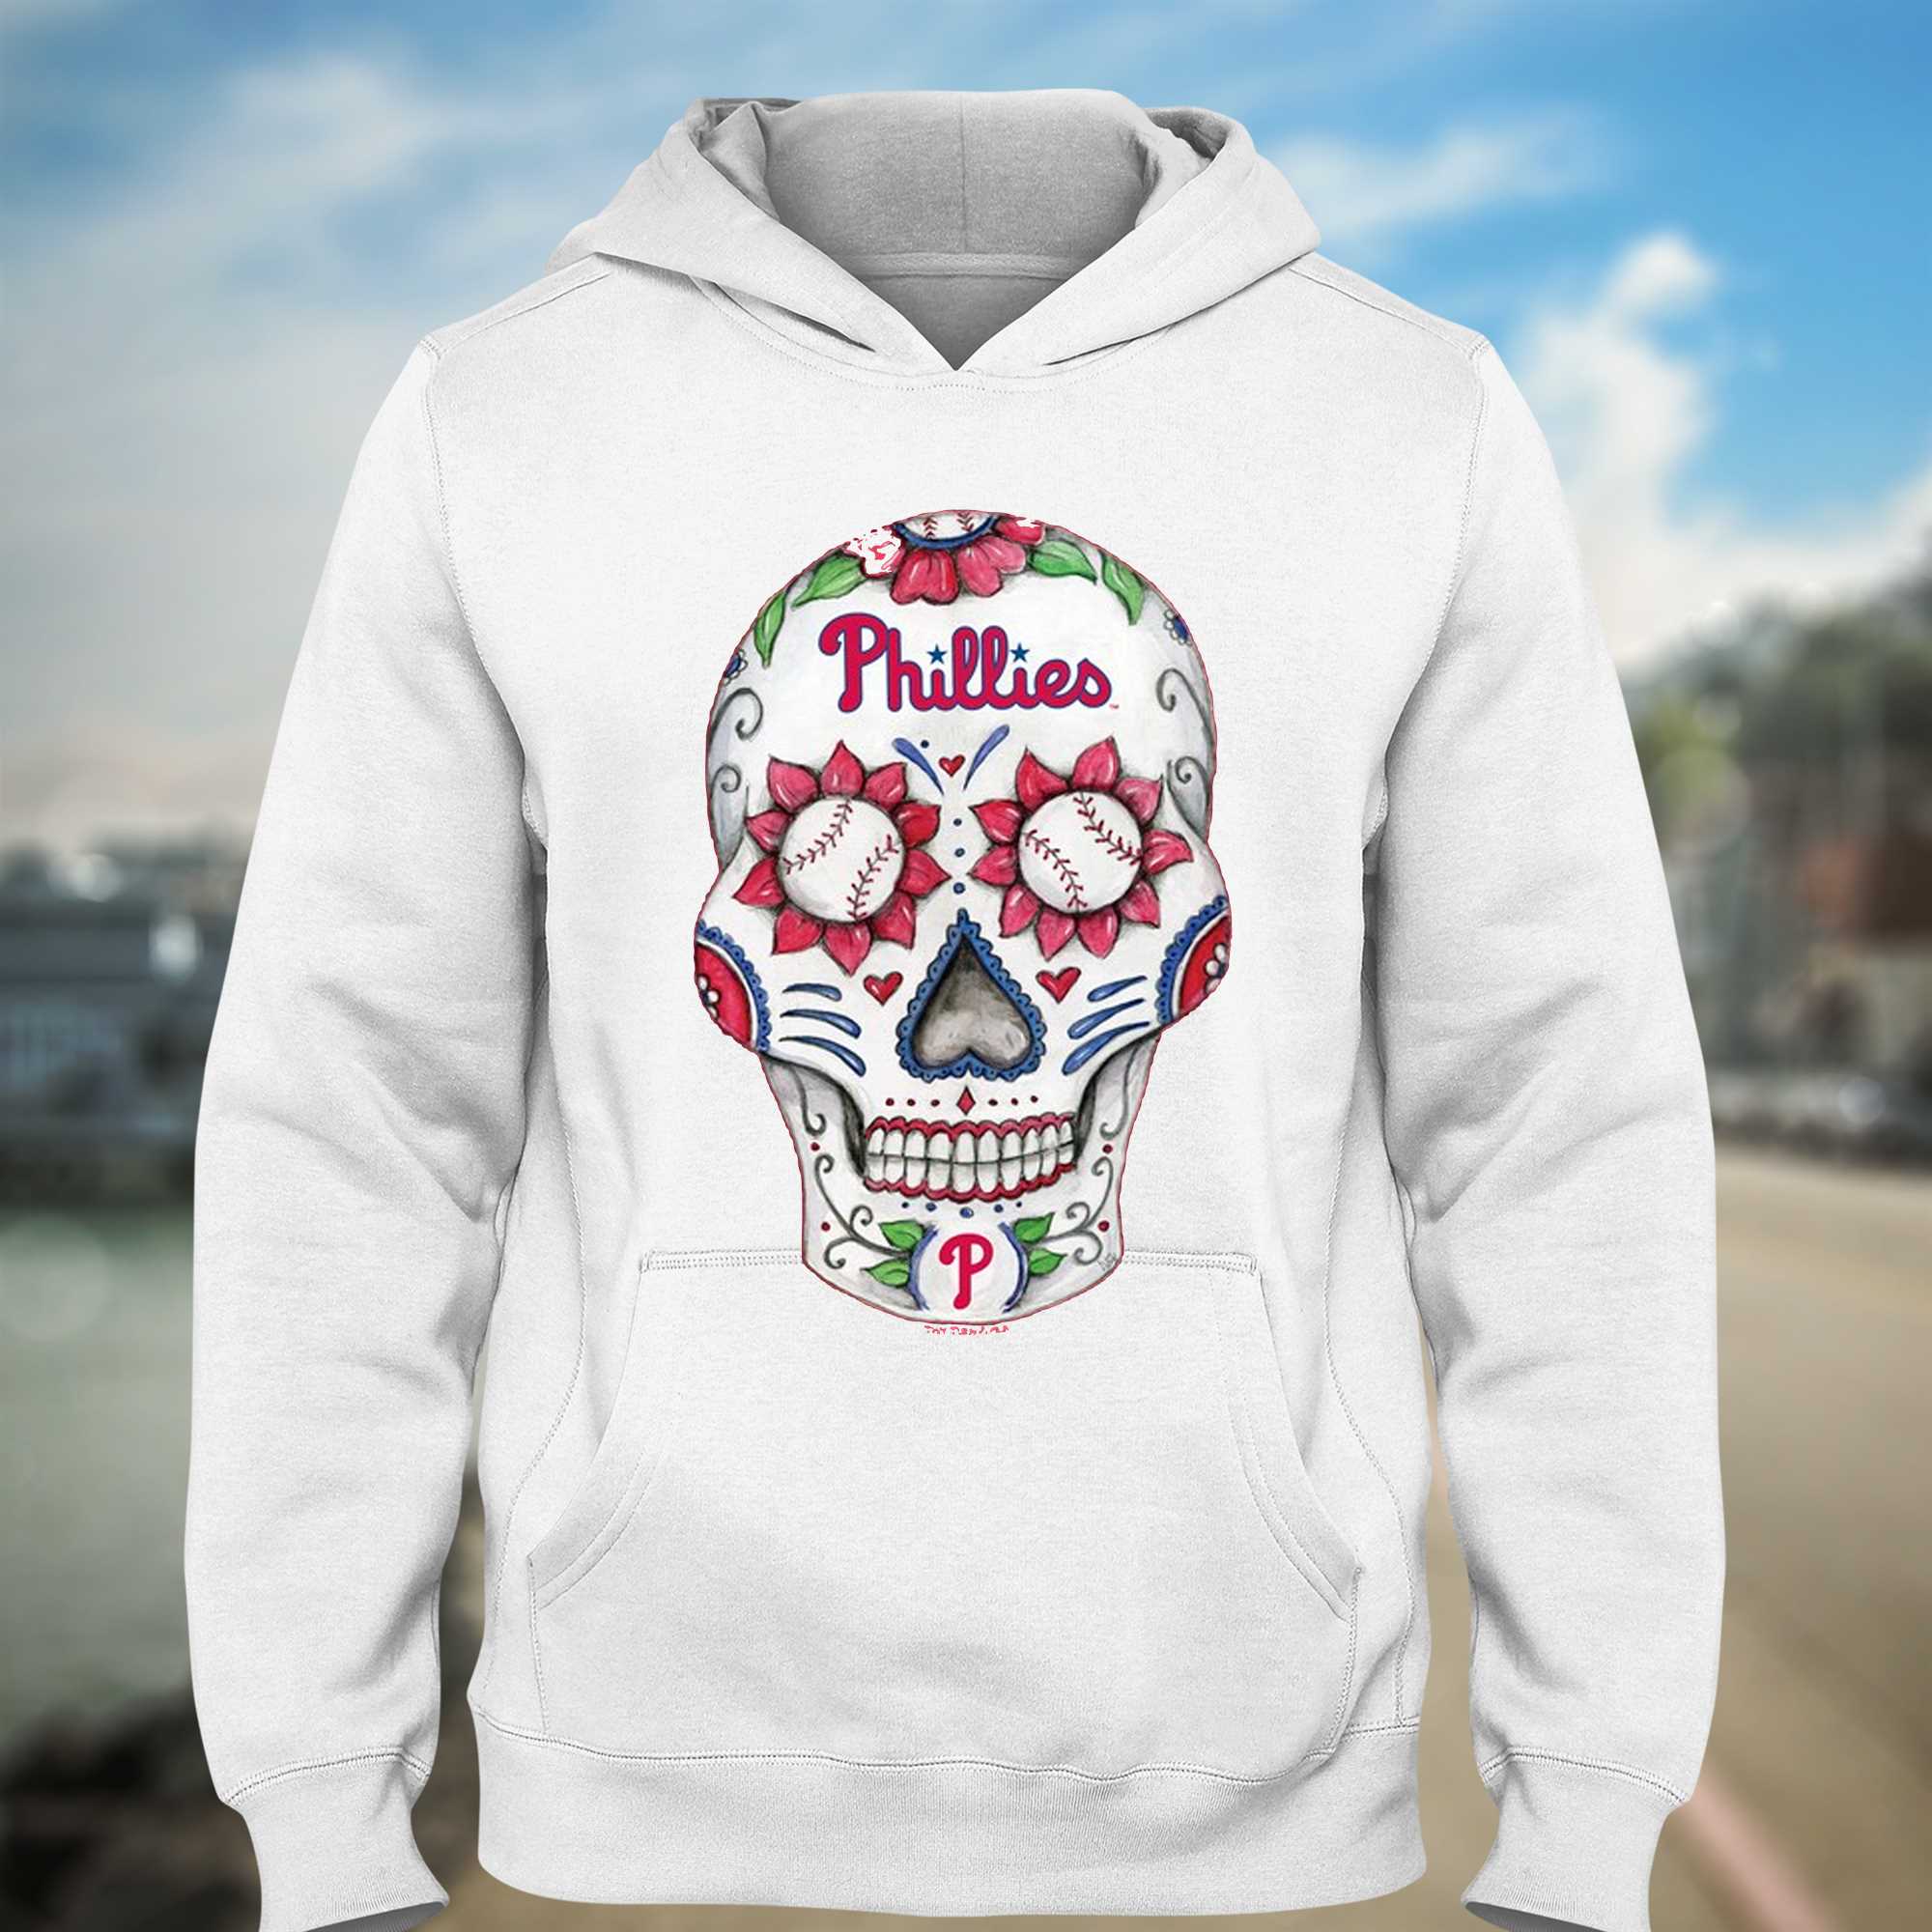 Philadelphia Phillies Sugar Skull Tee Shirt